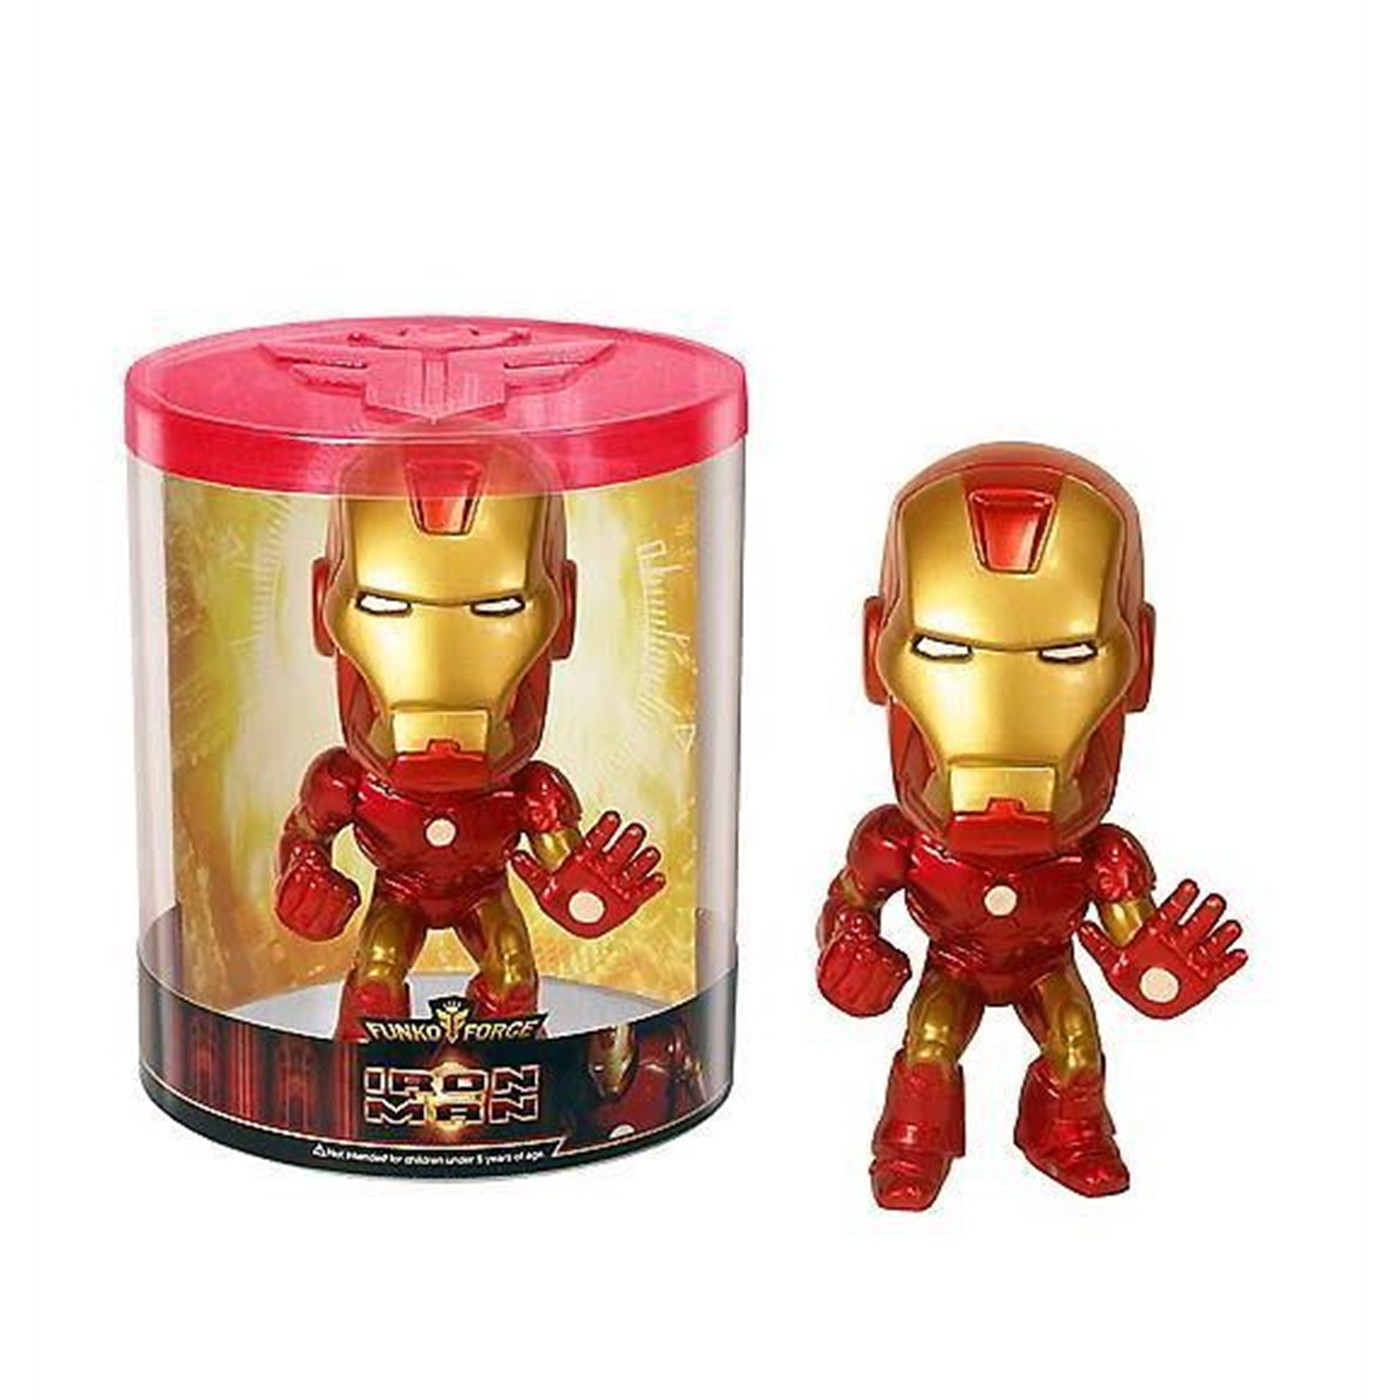 Iron Man Funko Force Modern Armor Deformed Bobblehead